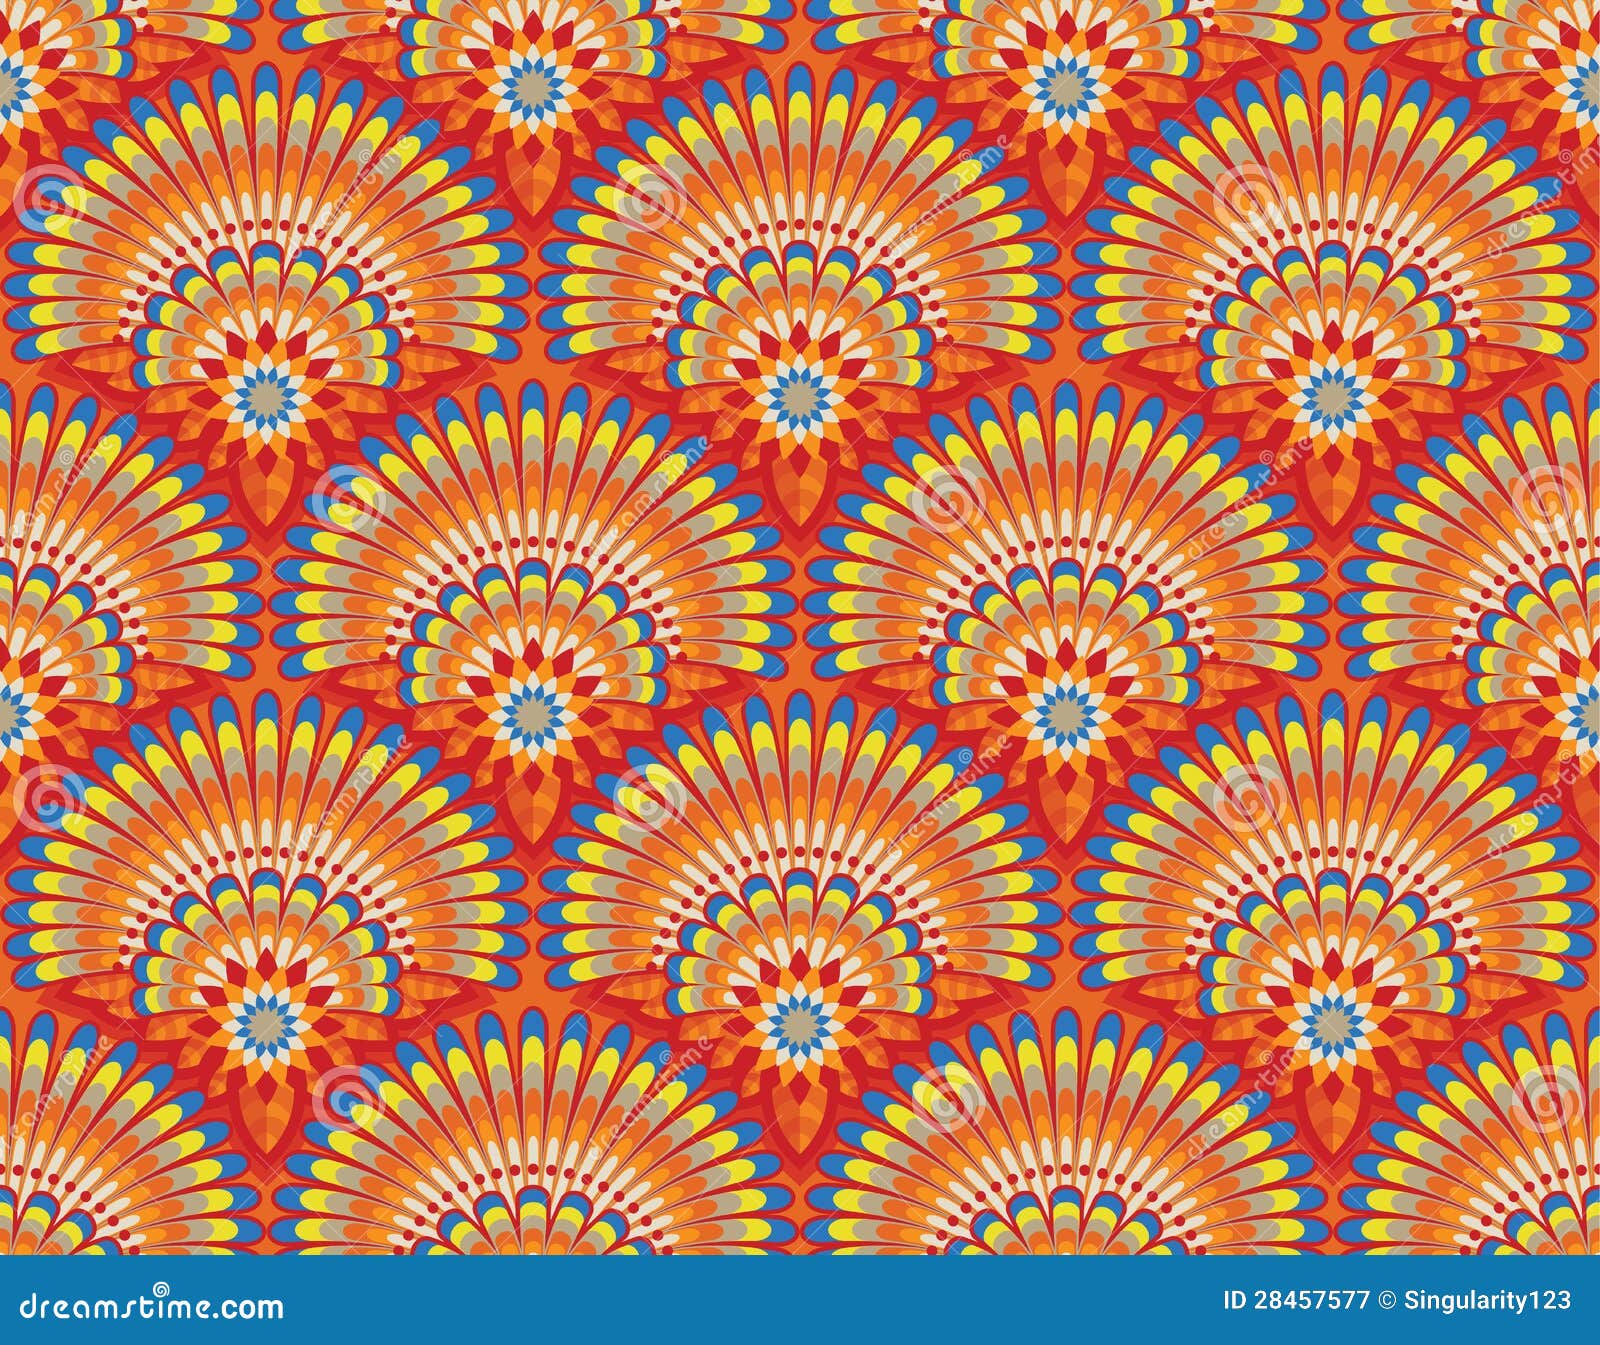 Ethnic wallpaper pattern stock vector. Illustration of flower - 28457577